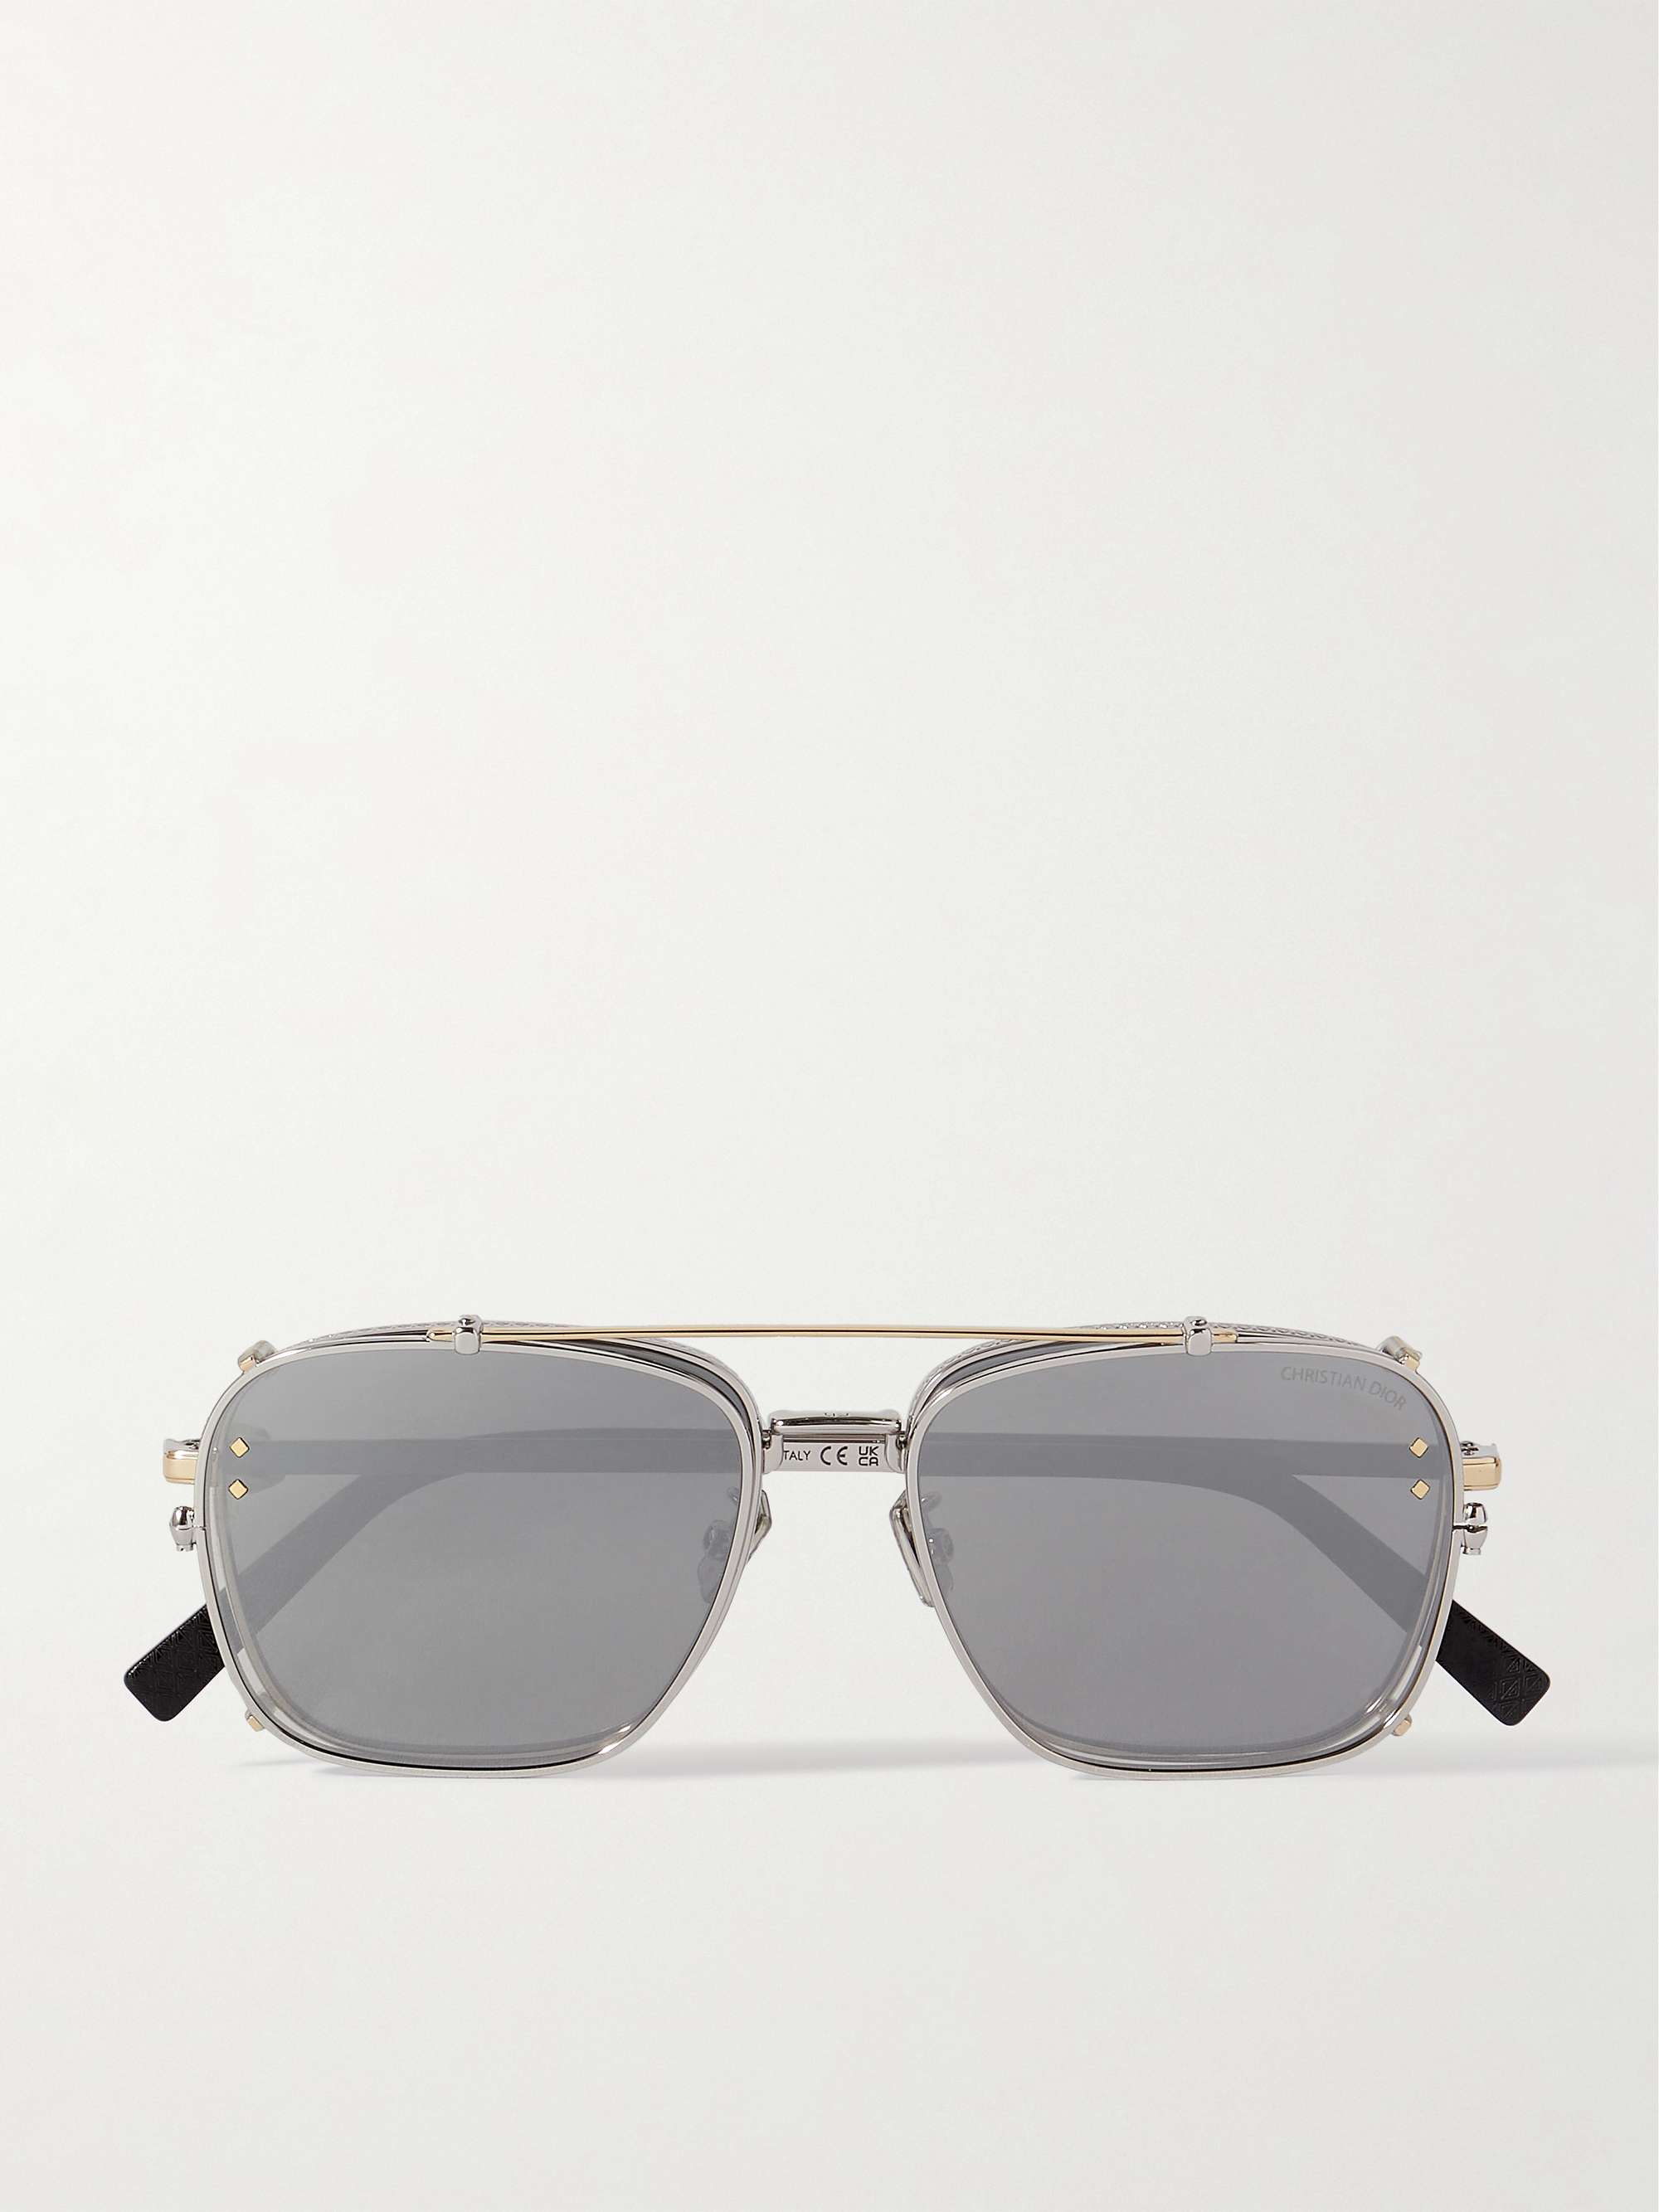 Dior Men's CD Diamond Pilot Sunglasses